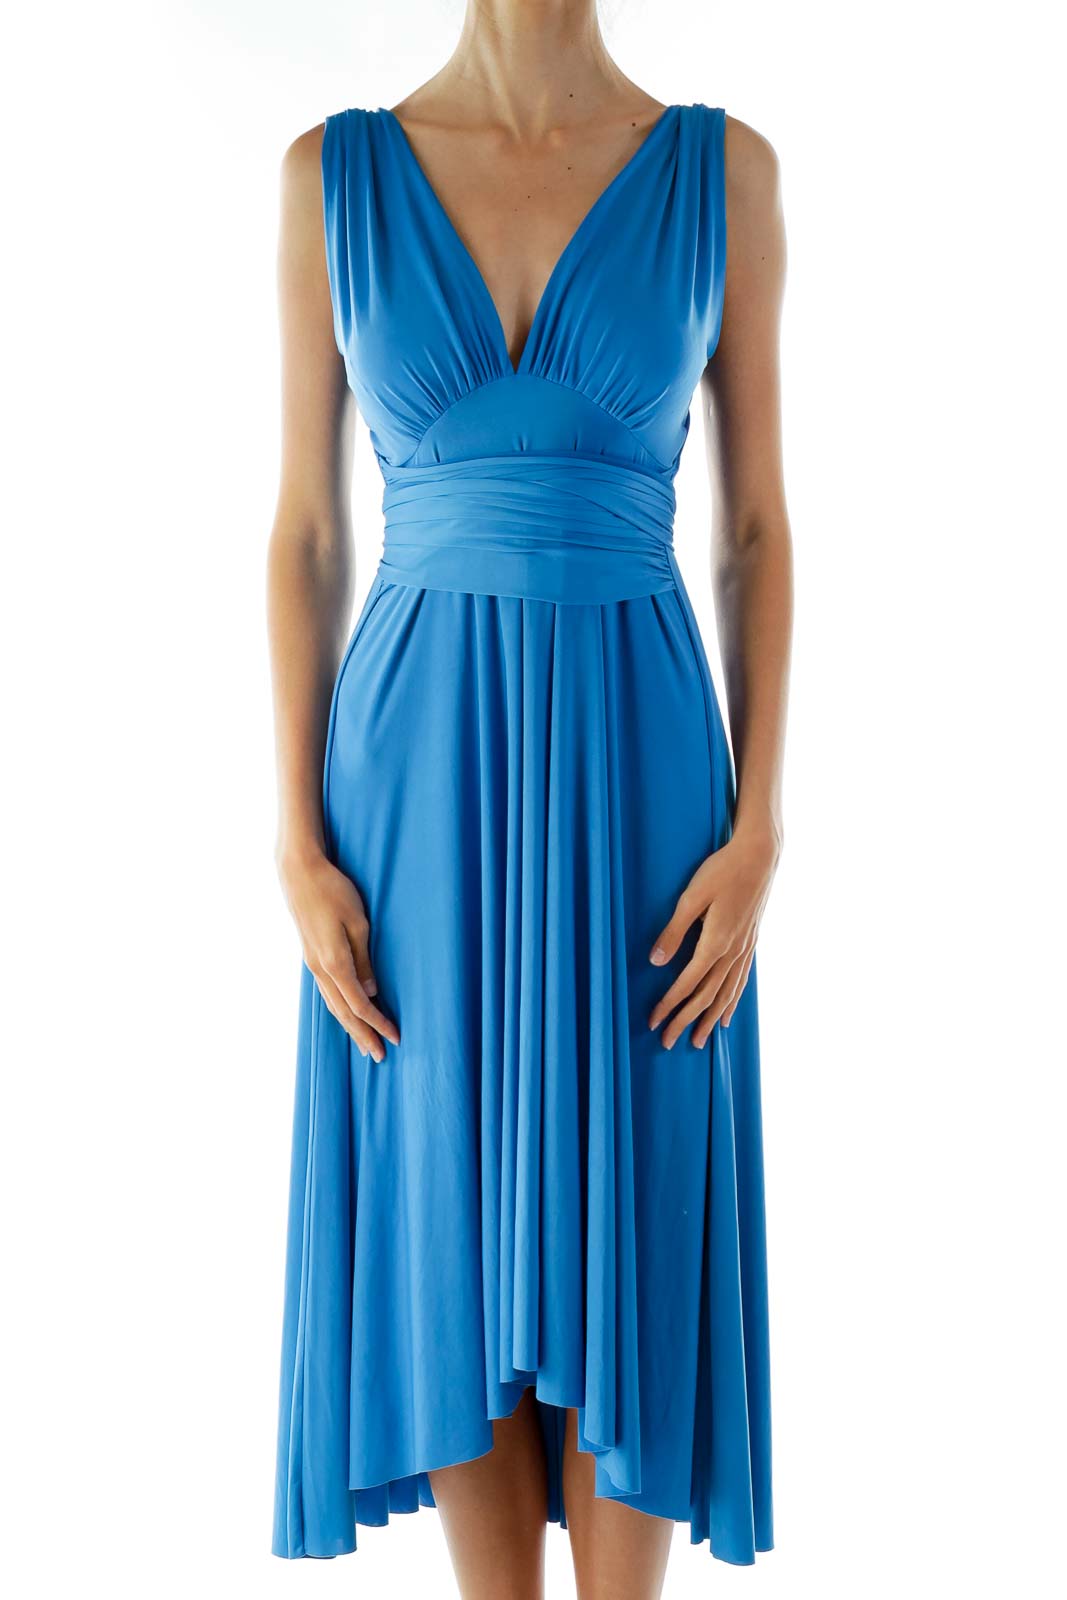 Blue Sleeveless Day Dress Front